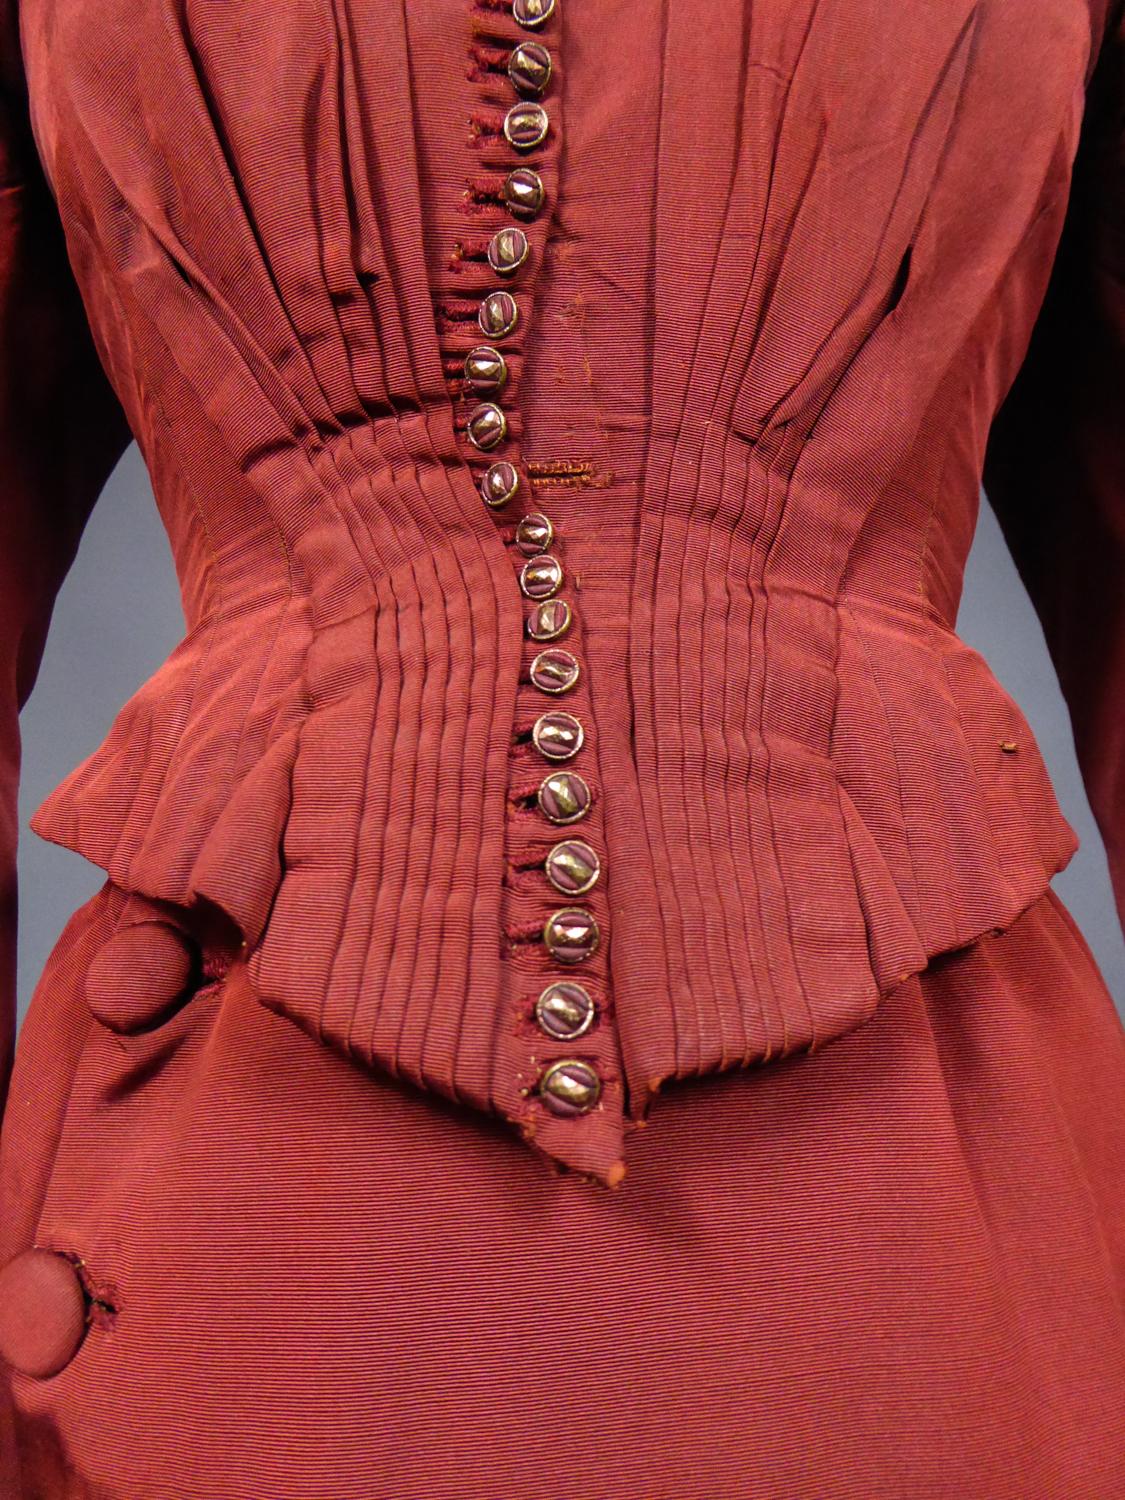 A Edwardian Faille Silk Amazon Bodice and Skirt Set  - England late 19th century 1